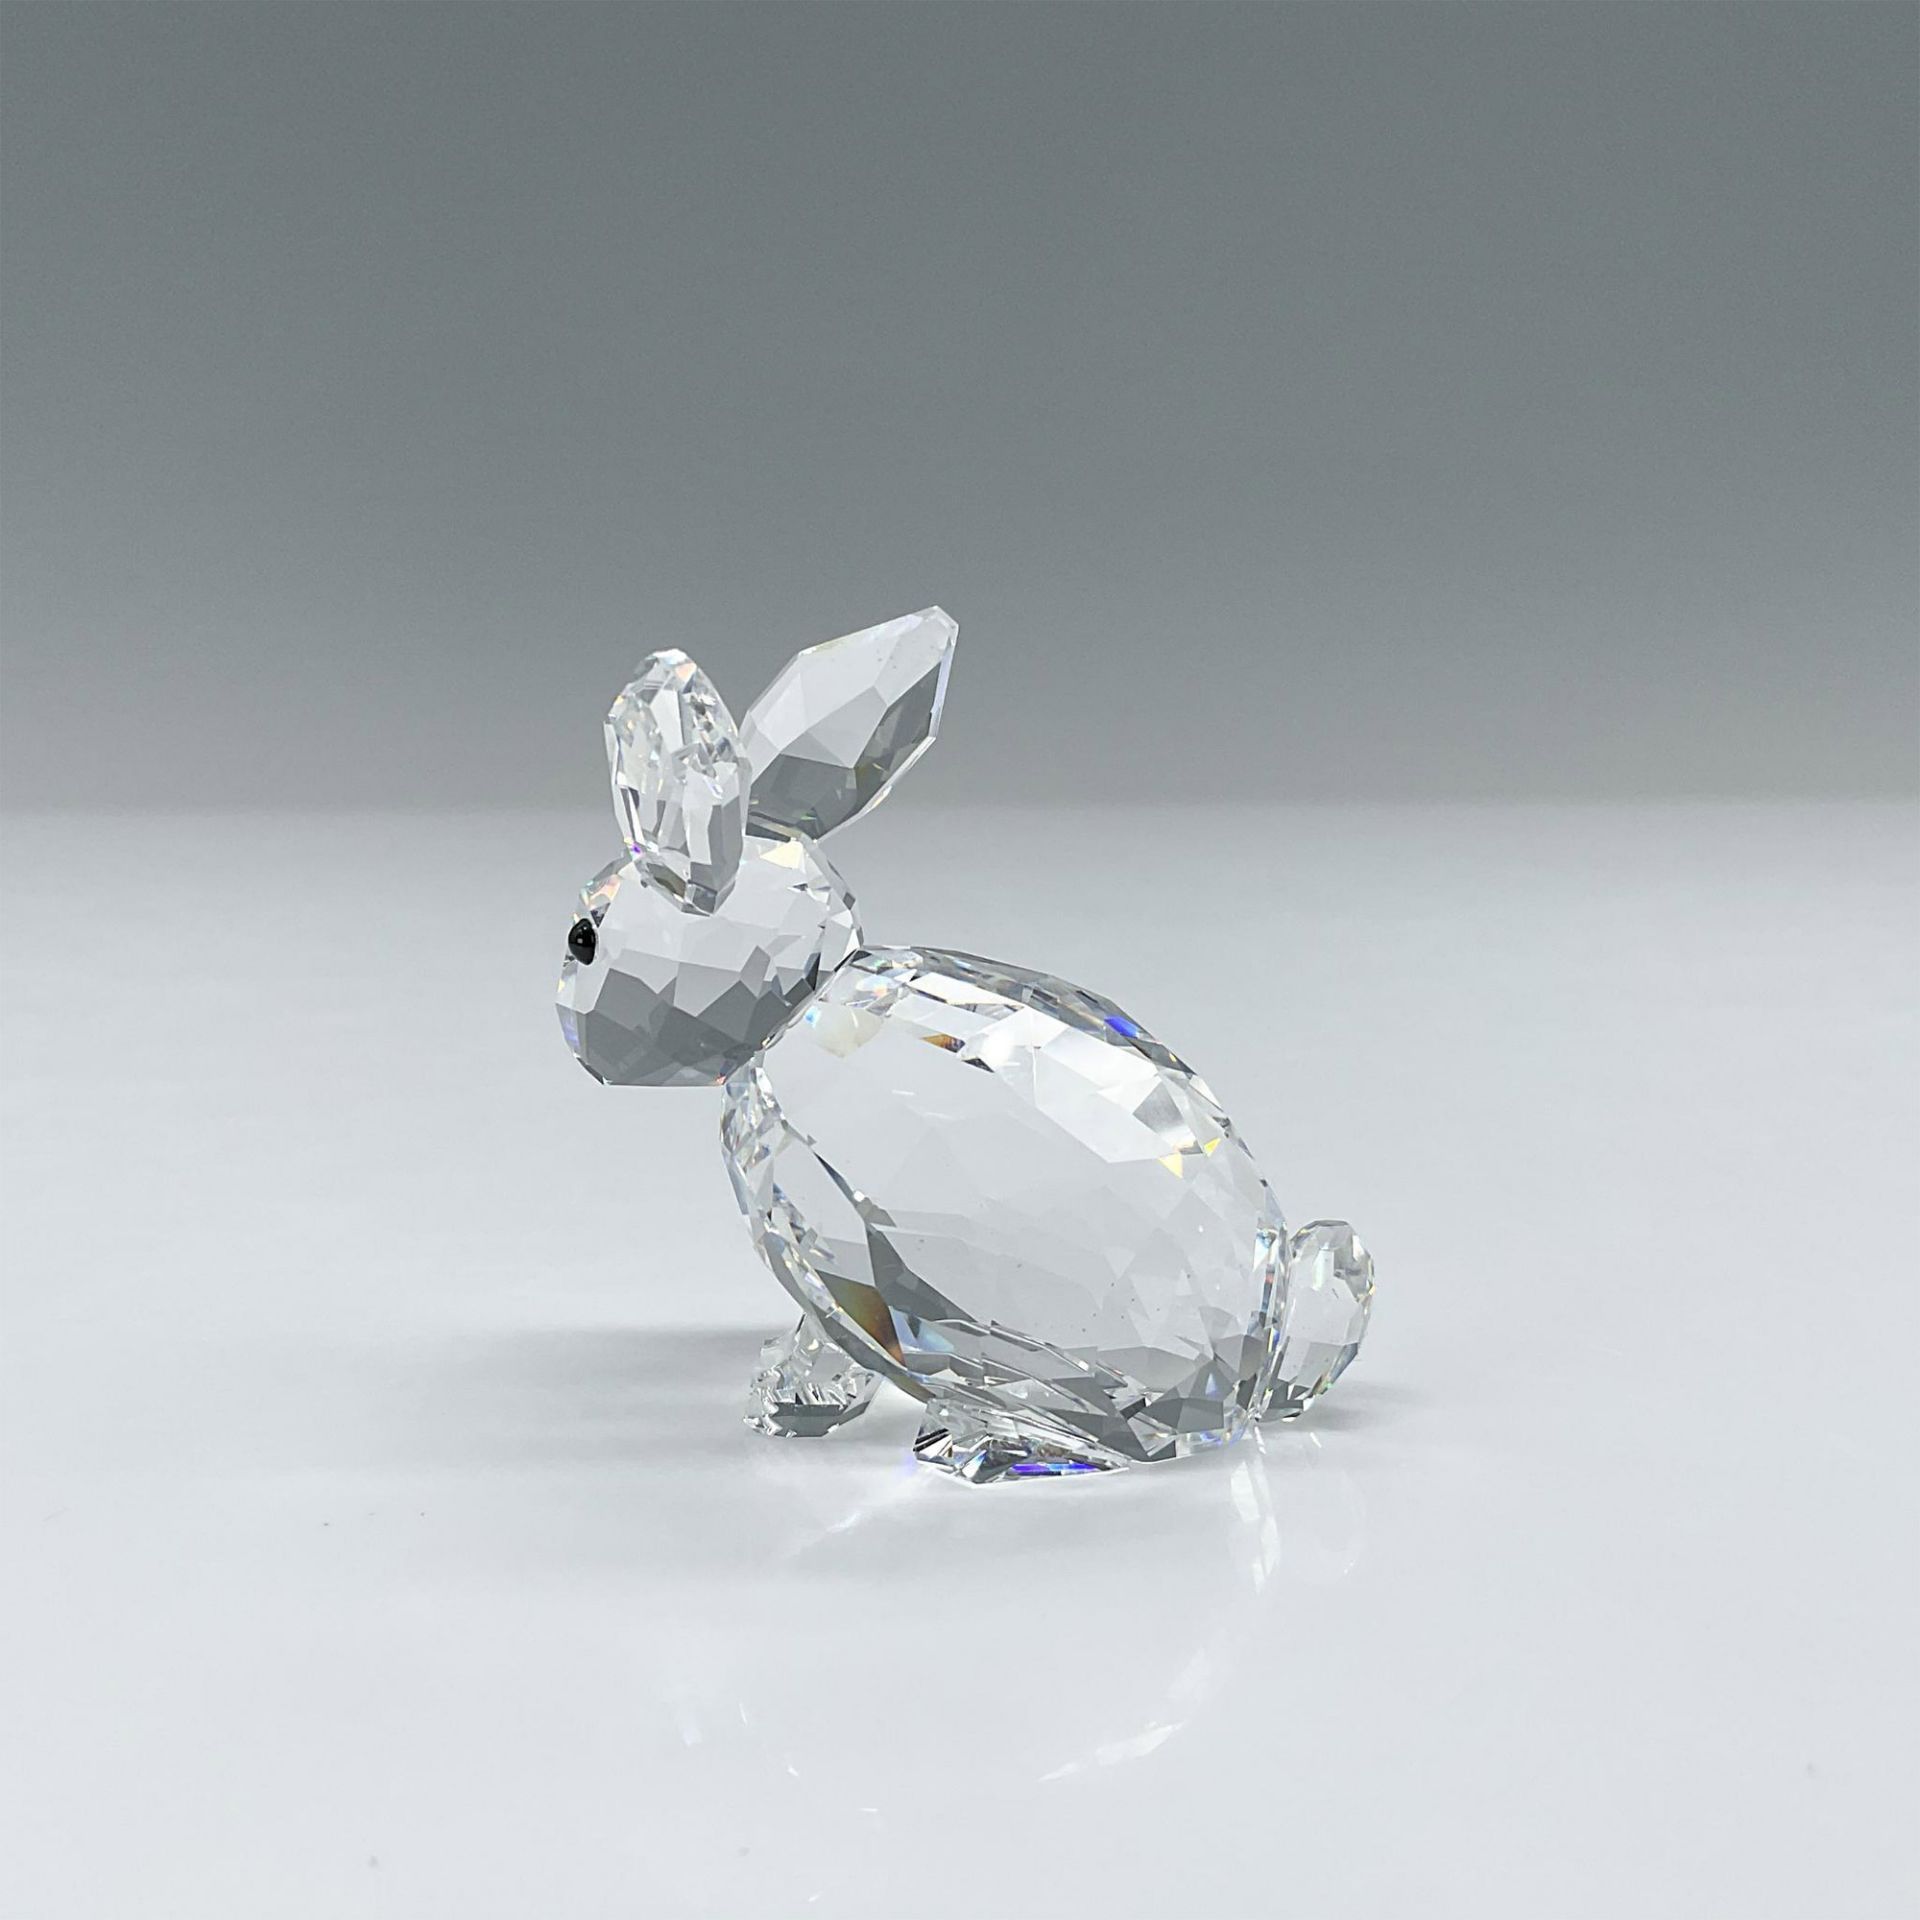 Swarovski Crystal Figurine, Sitting Rabbit - Image 2 of 4